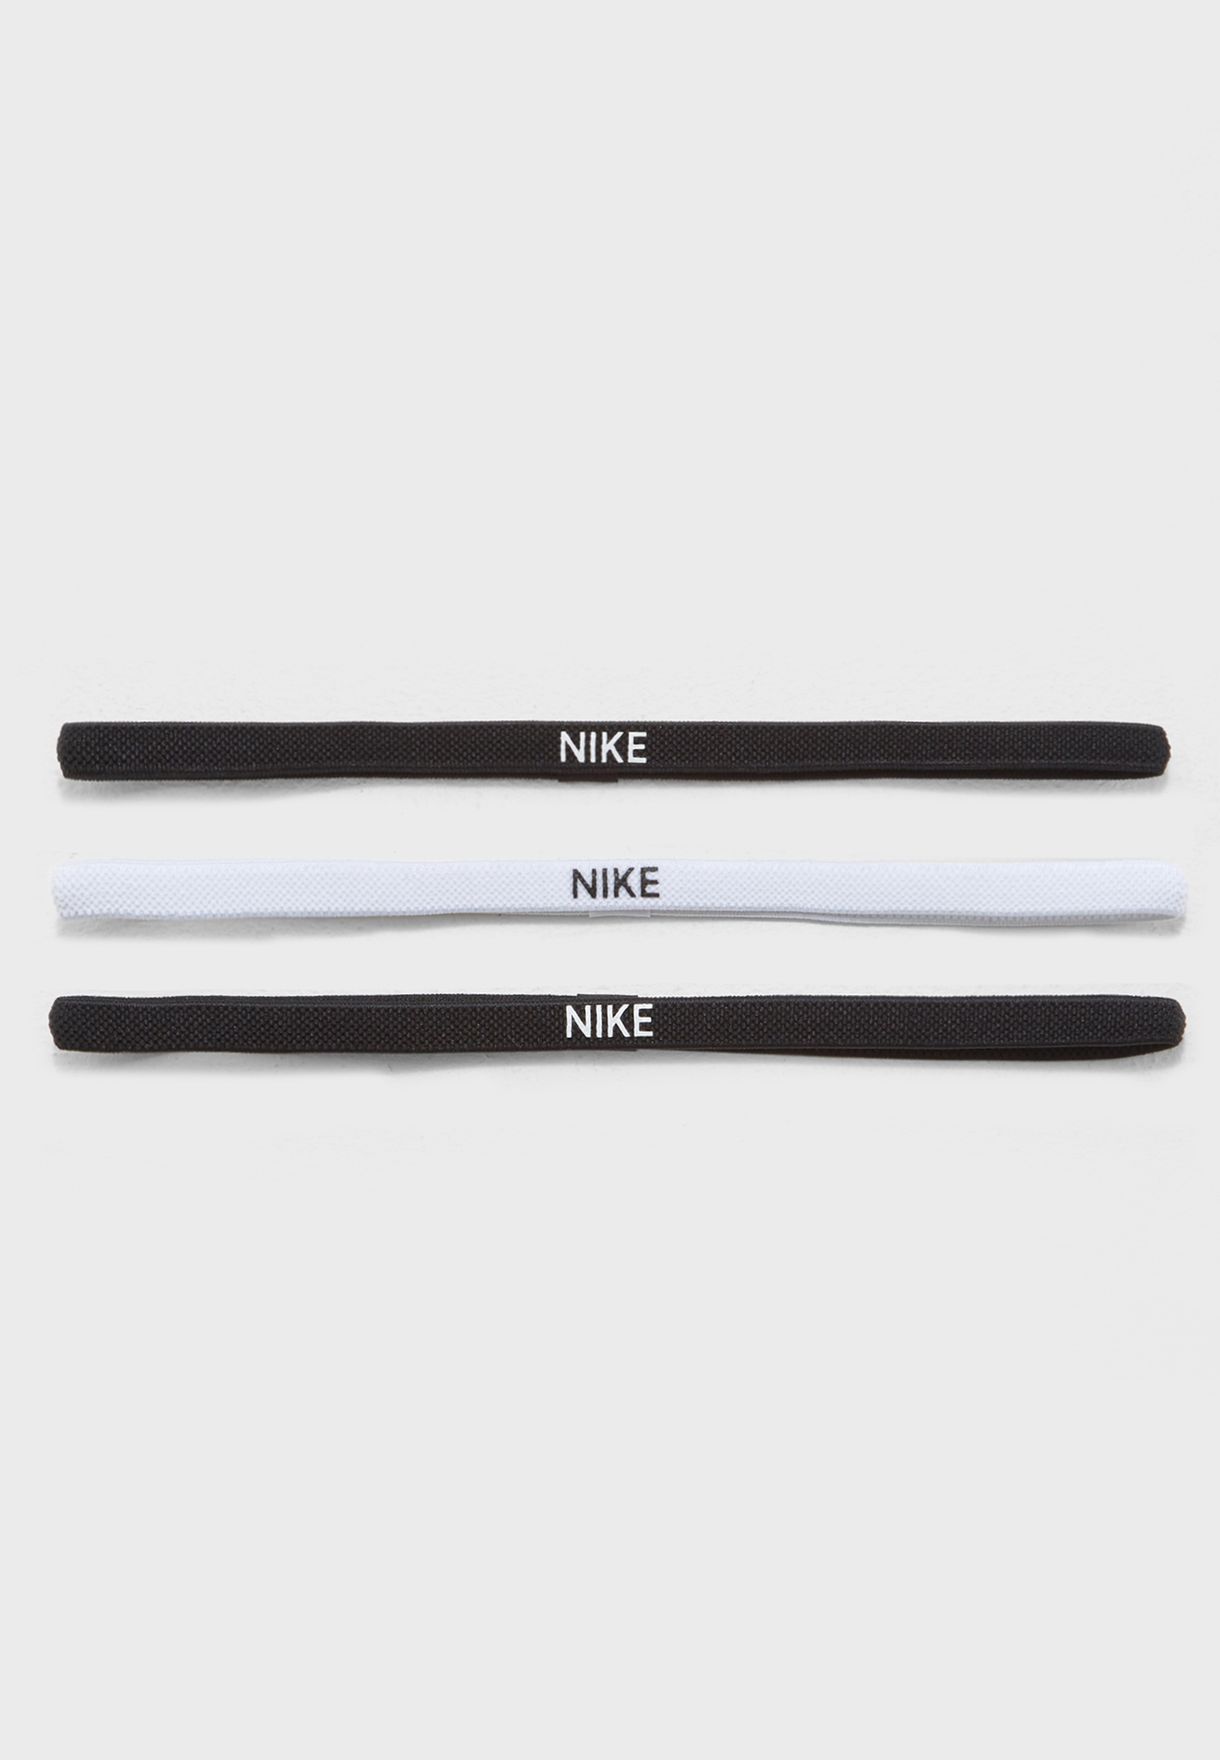 nike accessories elastic hairbands